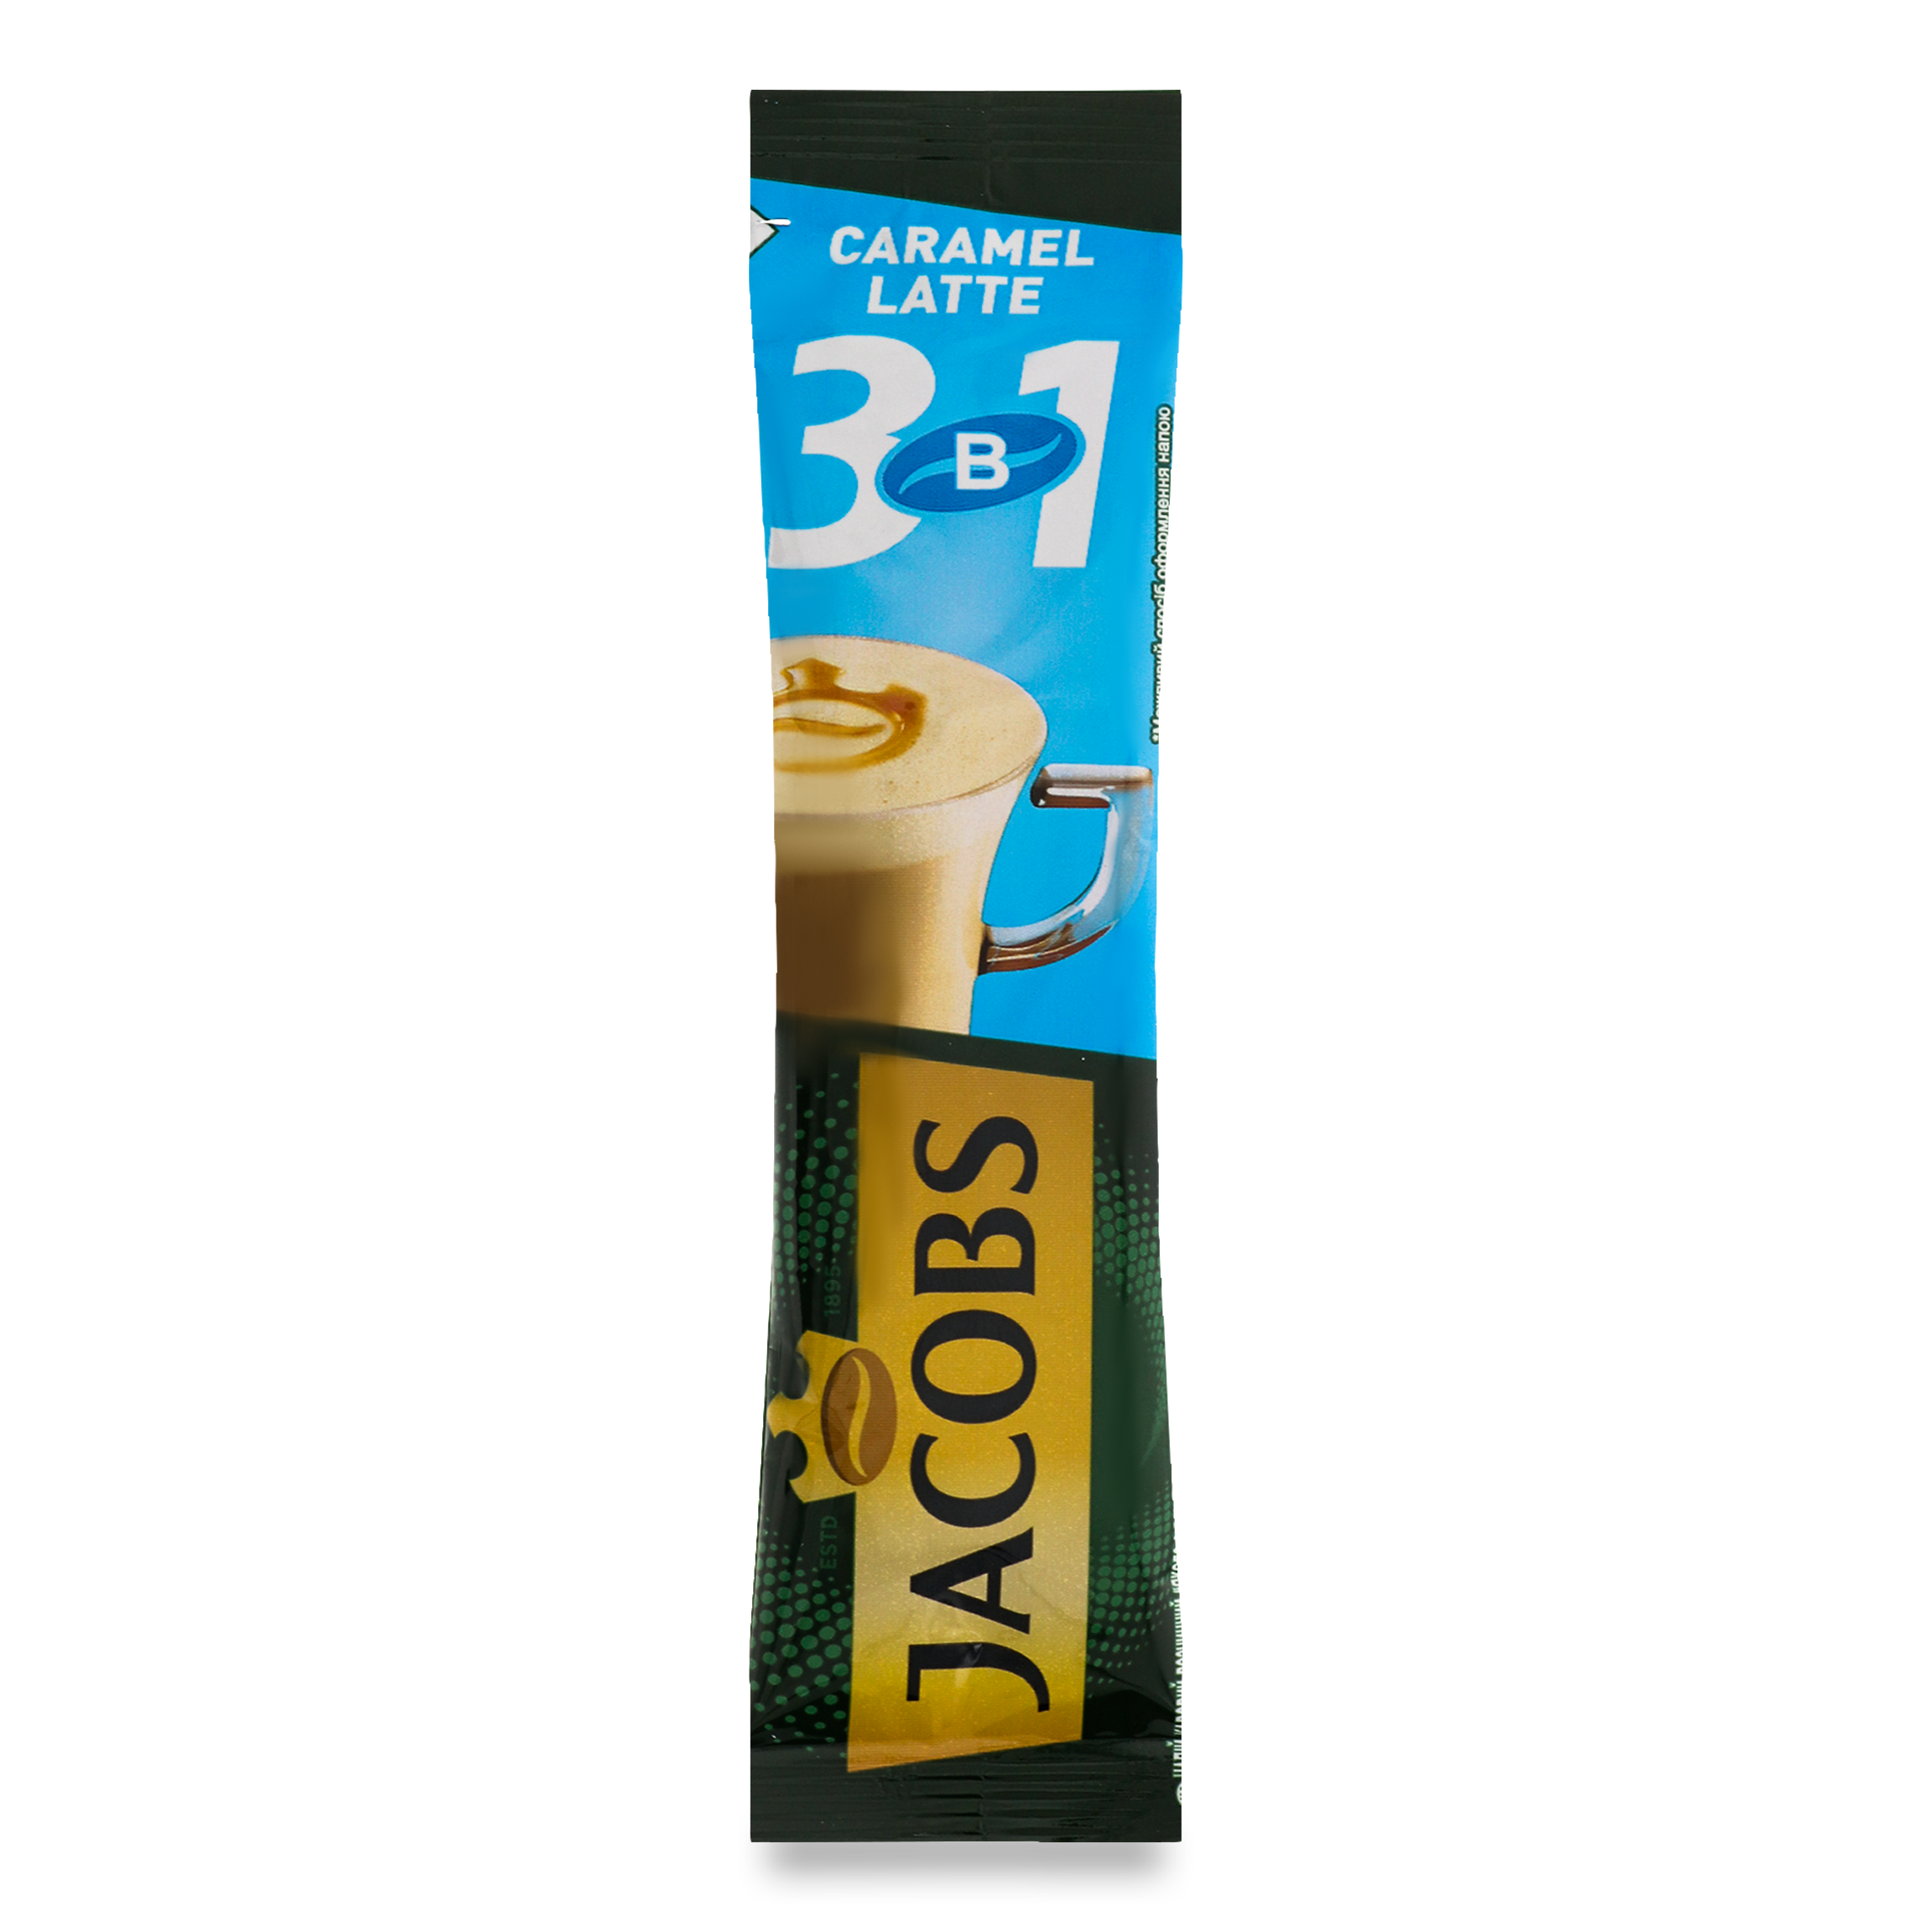 Jacobs 3in1 Caramel Latte coffee drink 12,3g